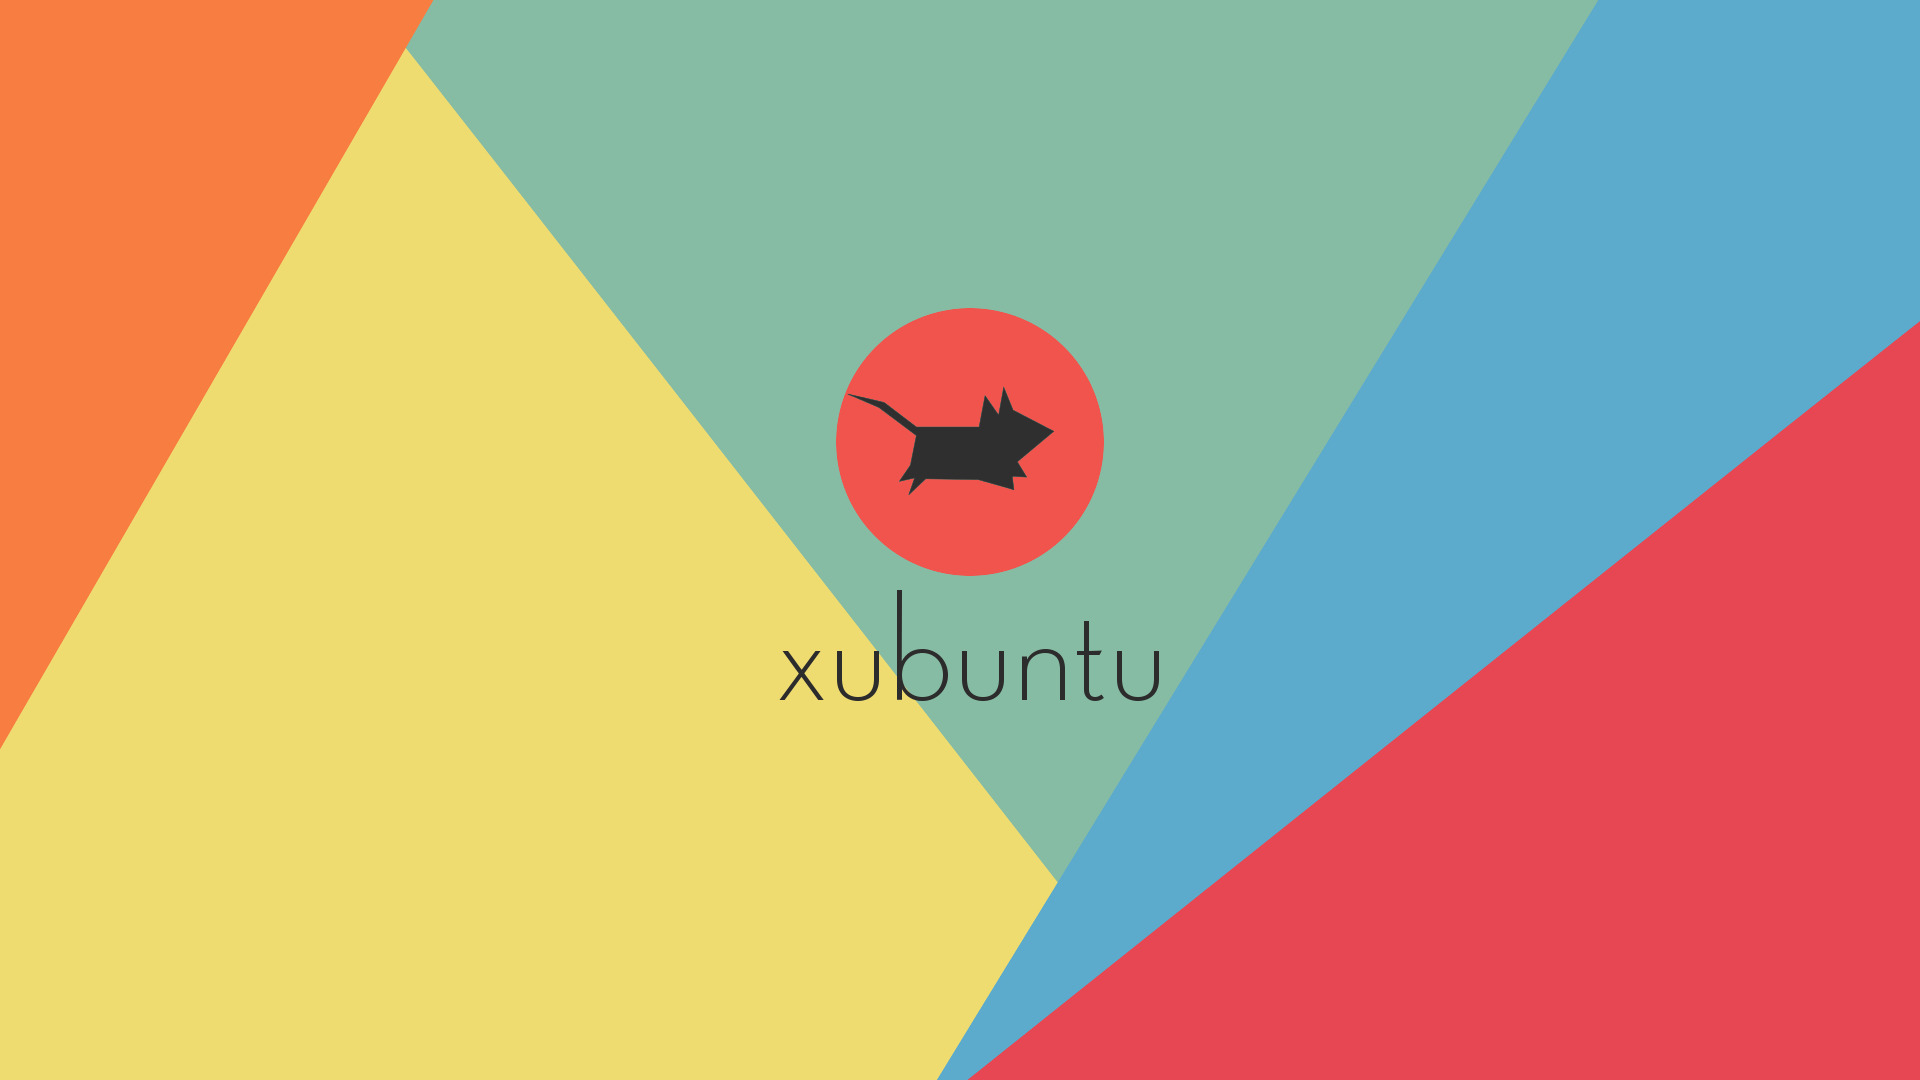 Xfce, Xubuntu, Linux, Material style, Flatdesign, Ubuntu Wallpaper